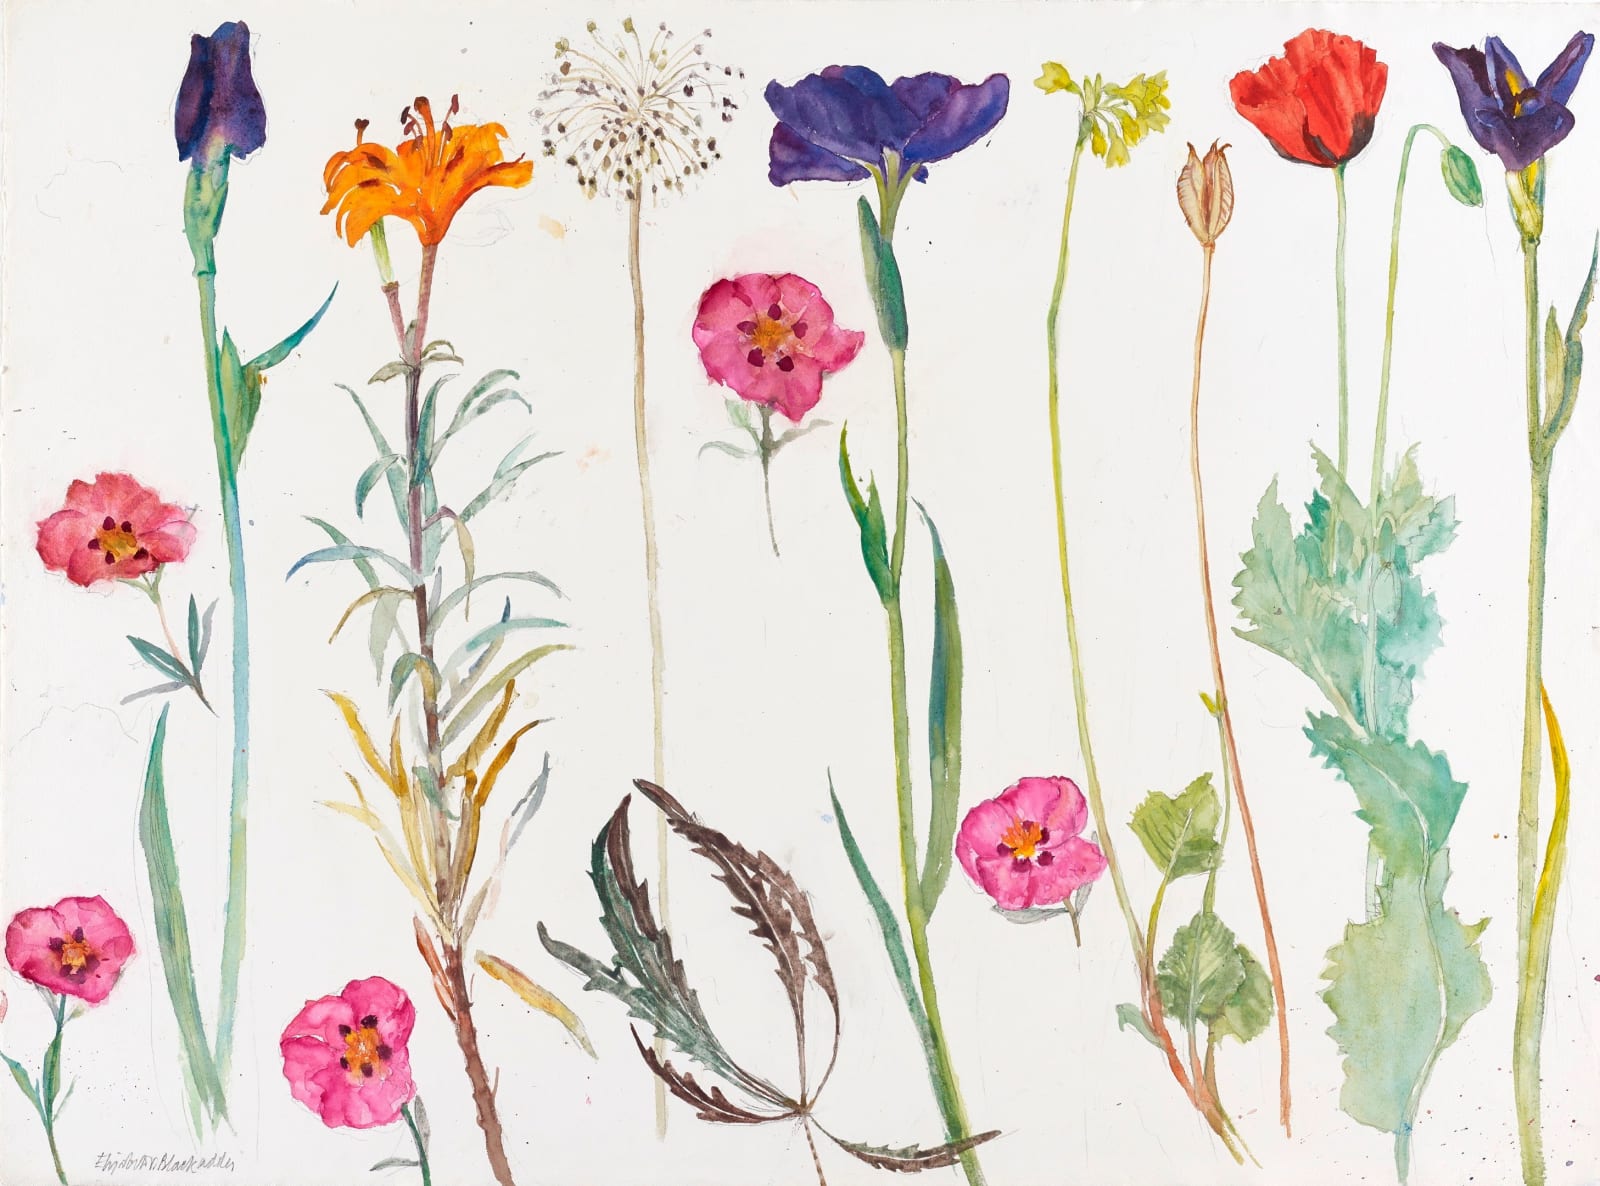 ELIZABETH BLACKADDER, Poppies and Irises, 2014